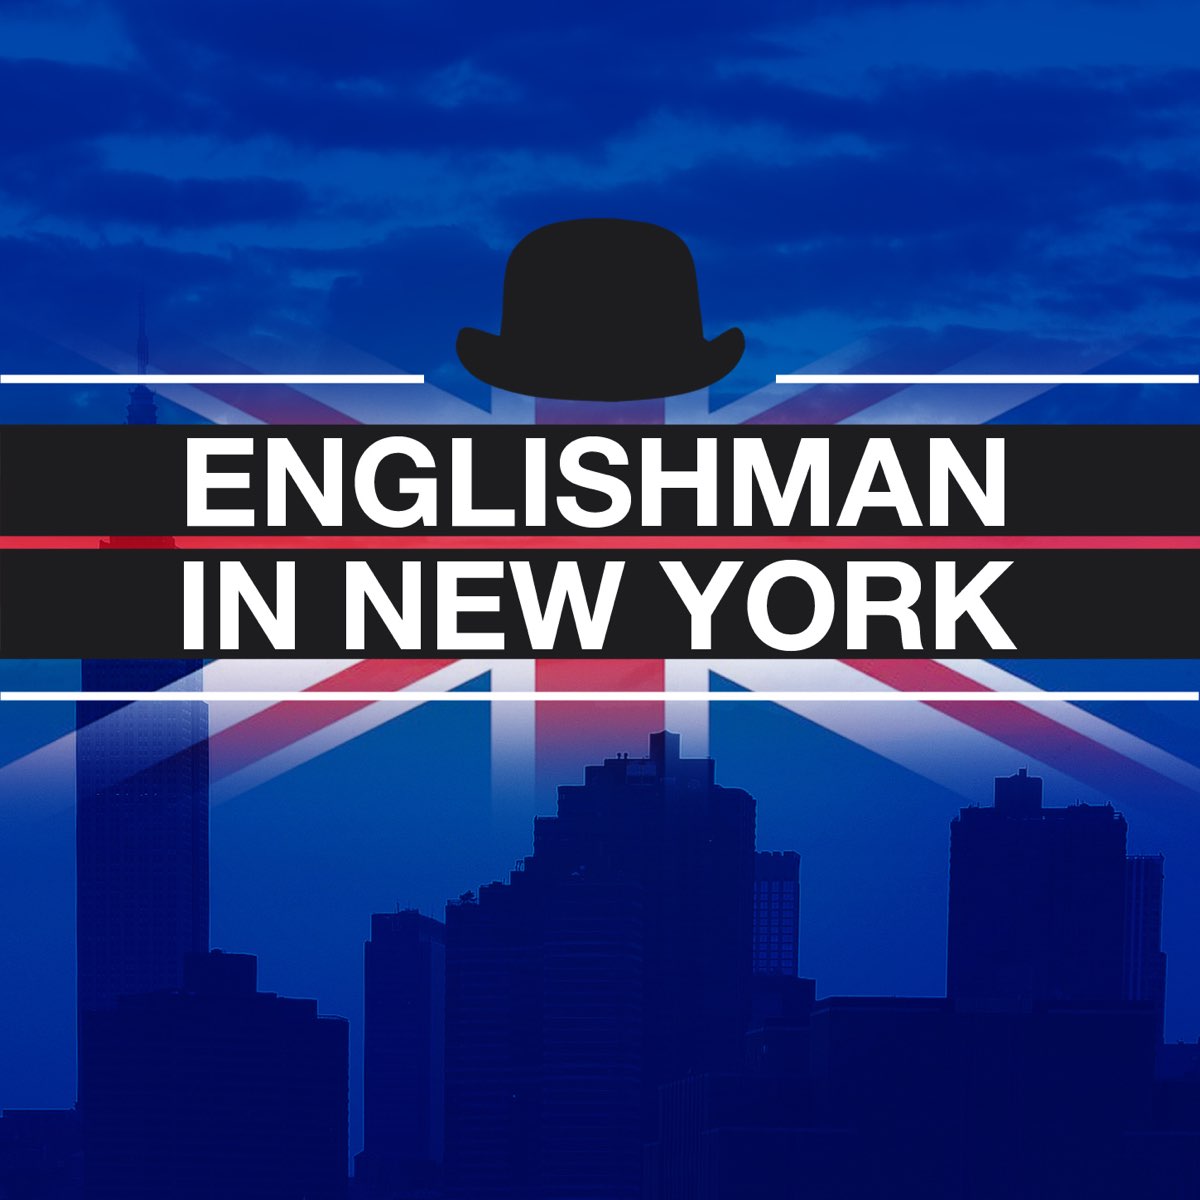 Стинг инглиш. Инглиш Мэн. Englishman in New York обложка. Инглиш Мэн Мем. New York Orchestra логотип.